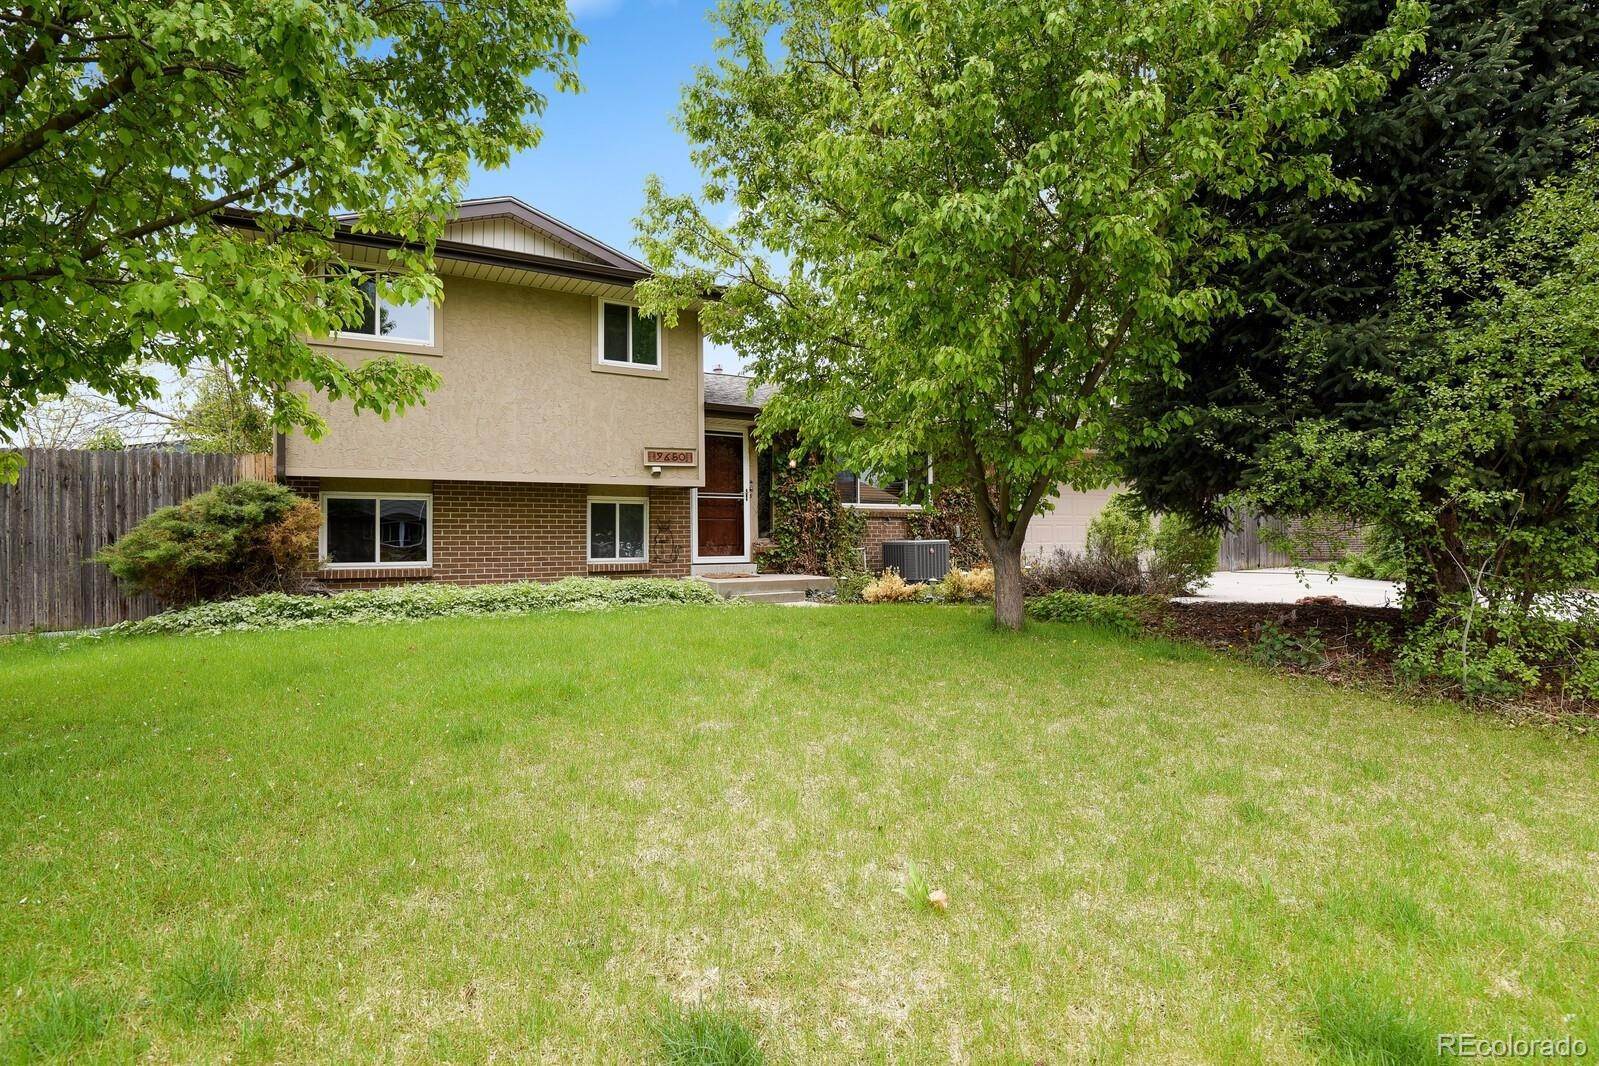 2. Single Family Homes for Sale at 9650 W Ohio Avenue Lakewood, Colorado 80226 United States